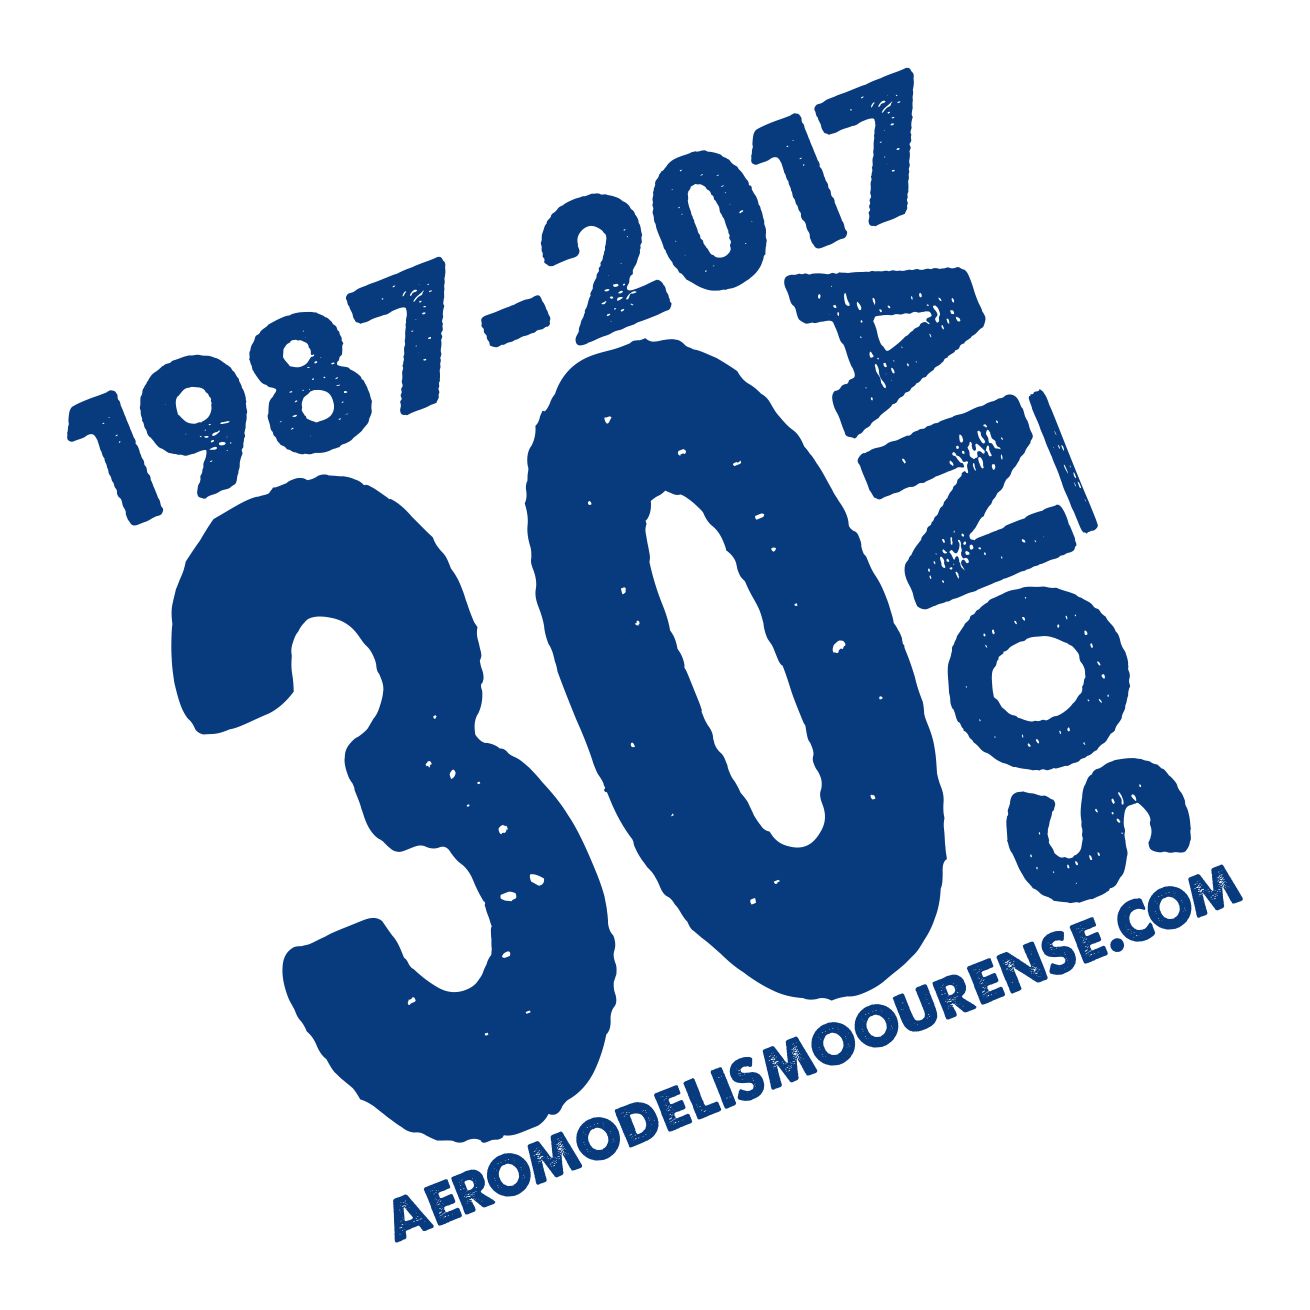 (c) Aeromodelismoourense.com